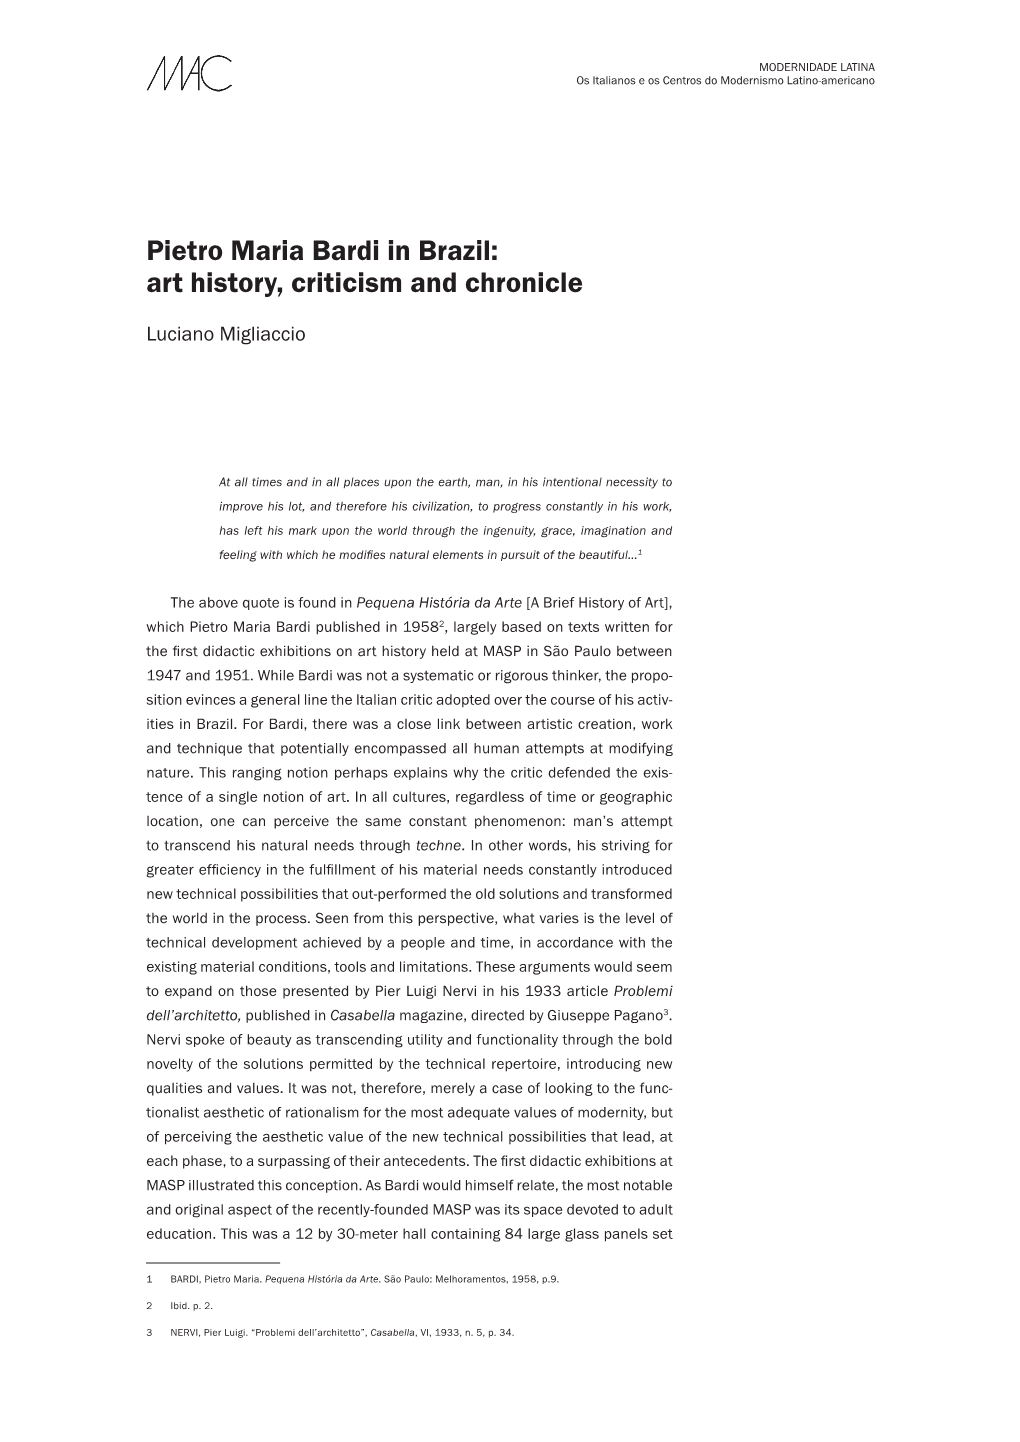 Pietro Maria Bardi in Brazil: Art History, Criticism and Chronicle